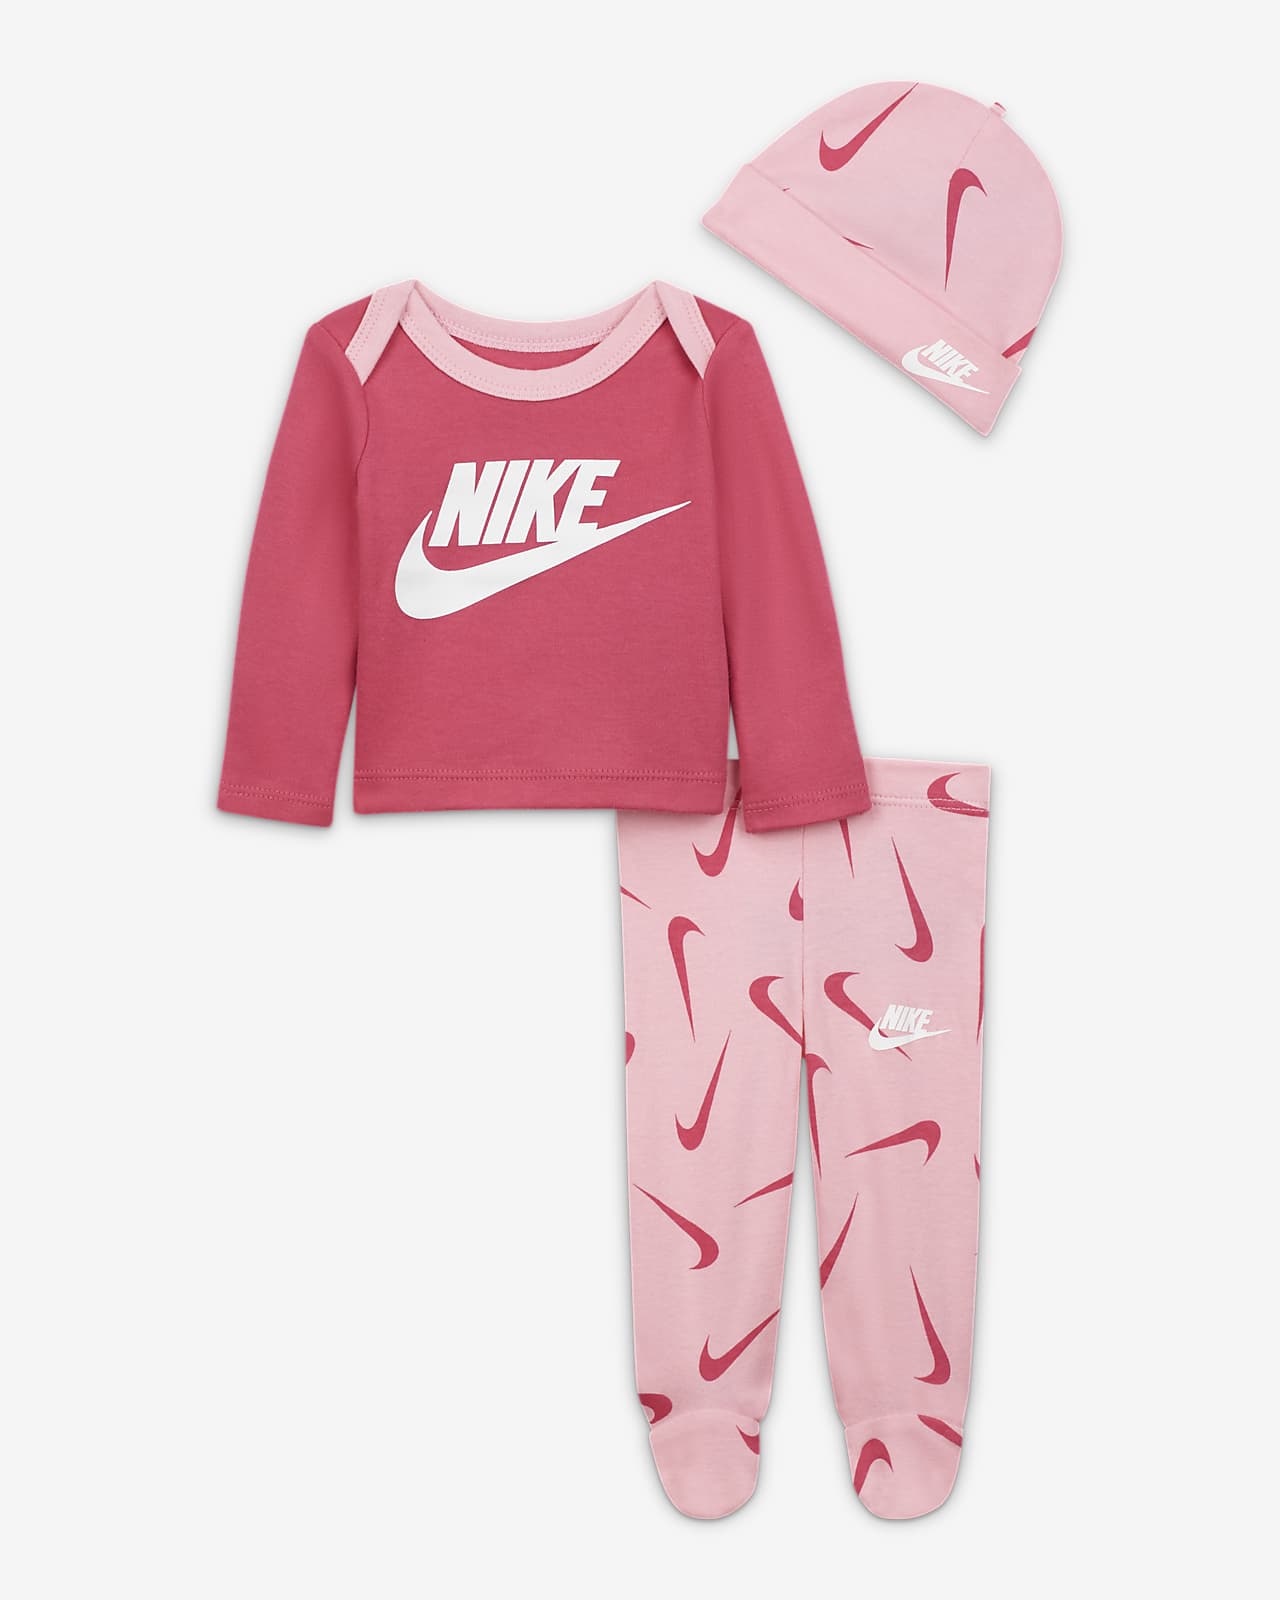 Nike Baby (Preemie-9M) 3-Piece Set 